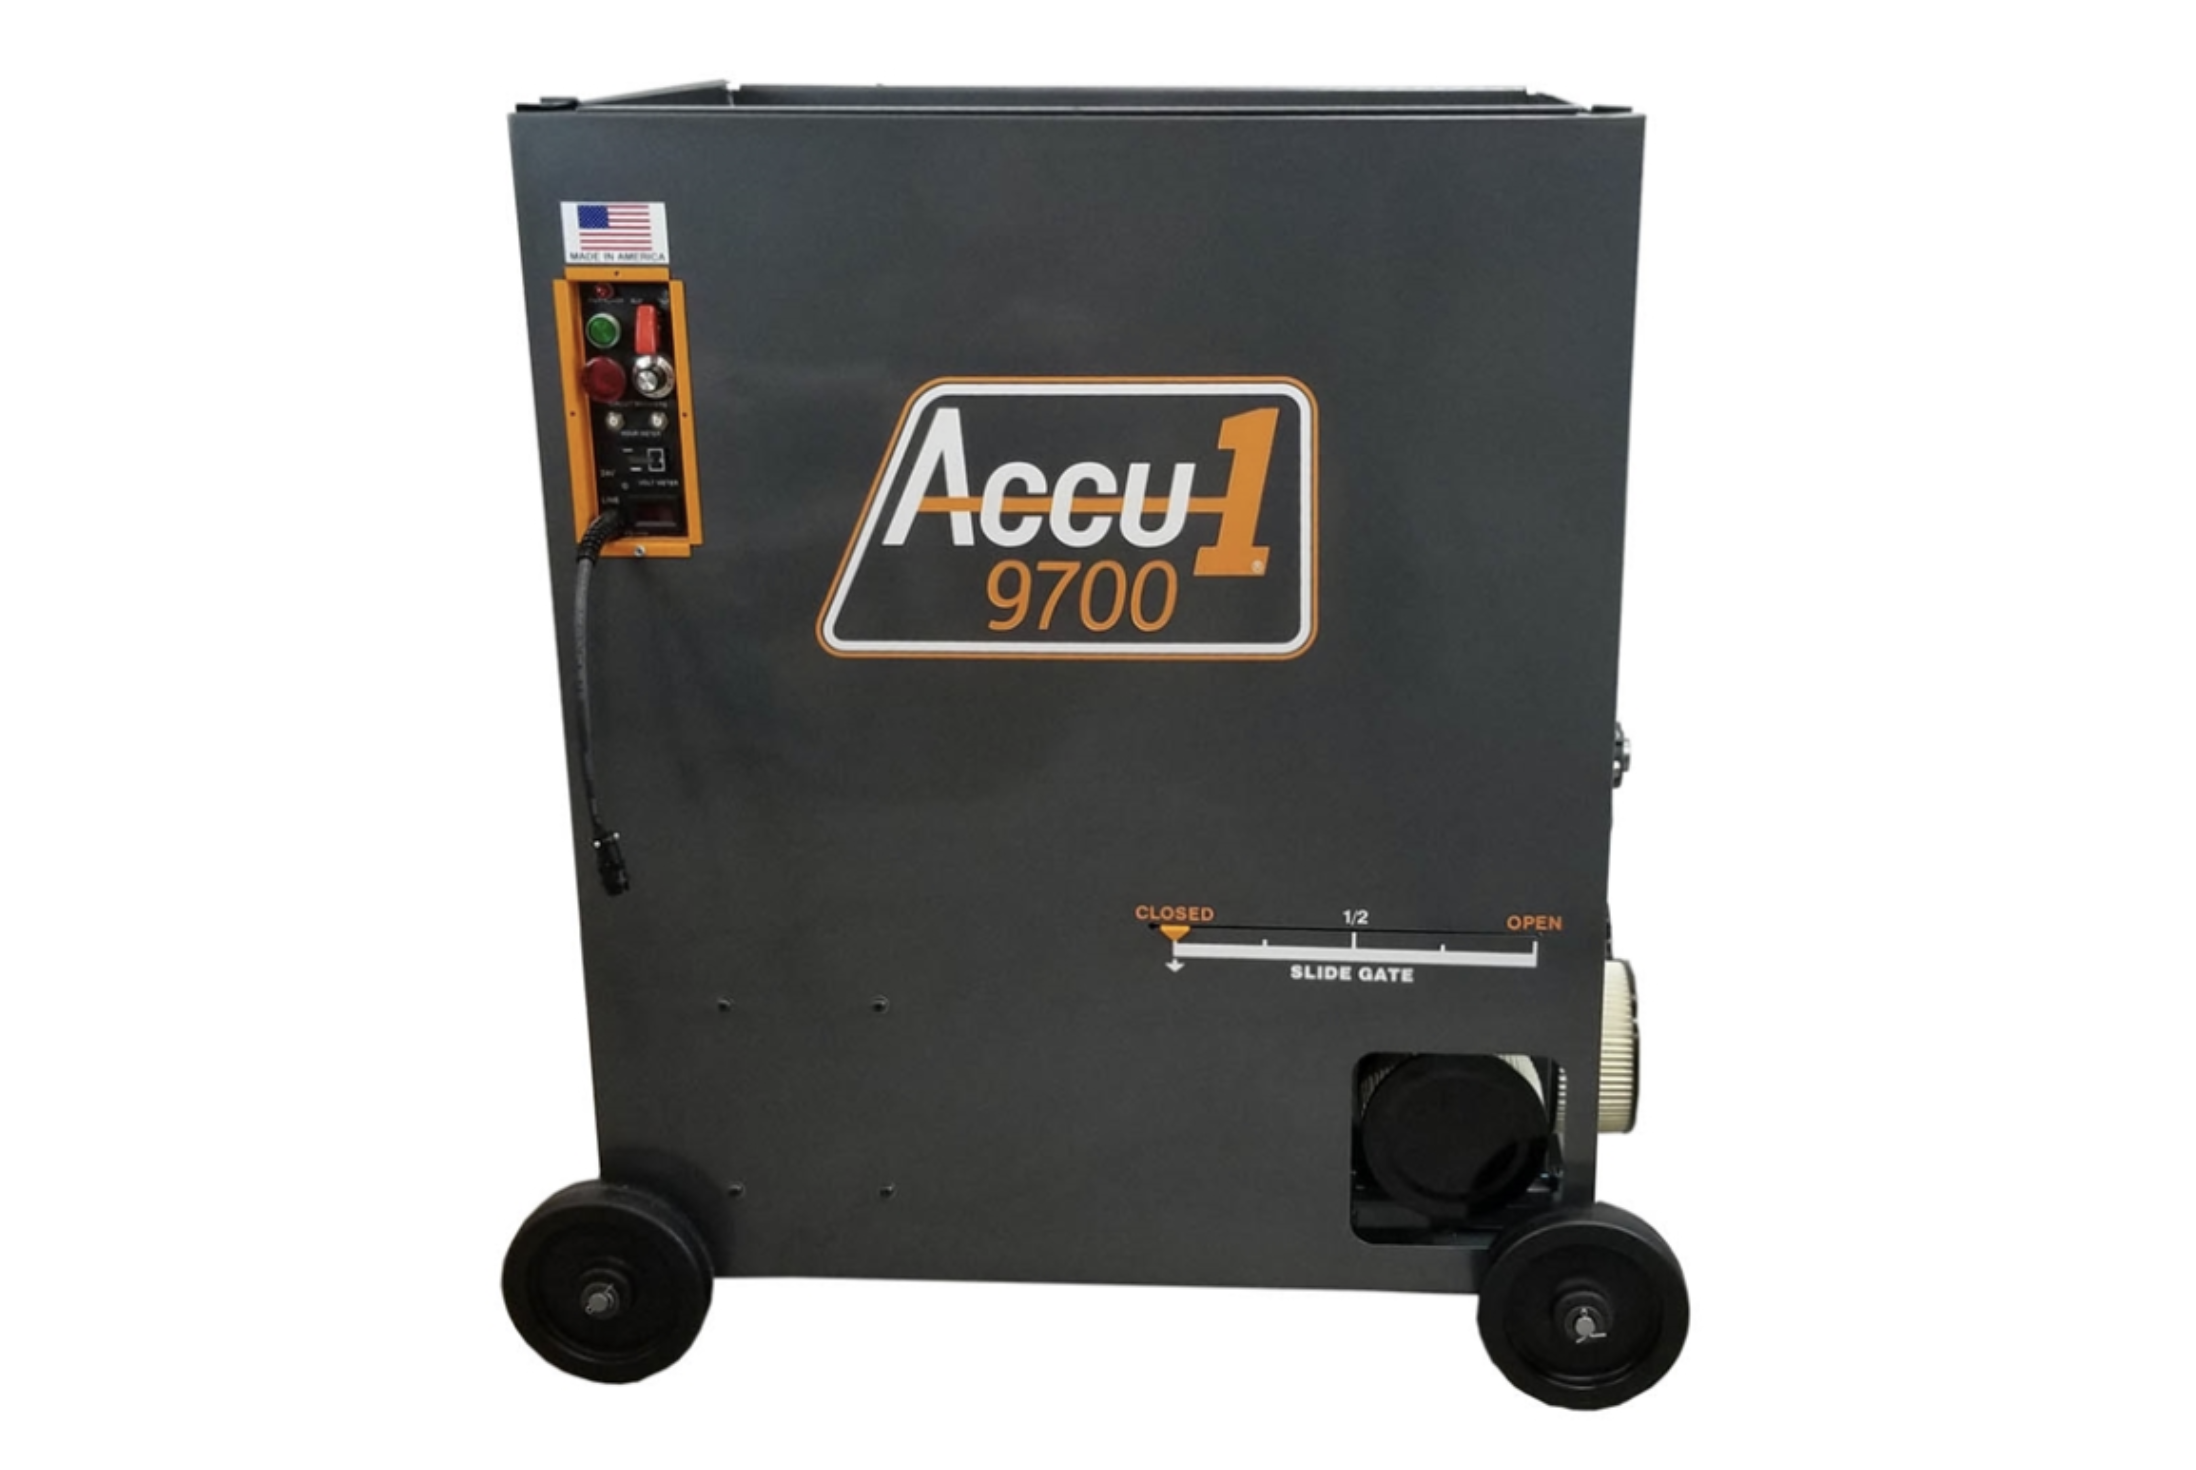 Accu1 9700 Insulation Blowing Machine & Blower Accessories